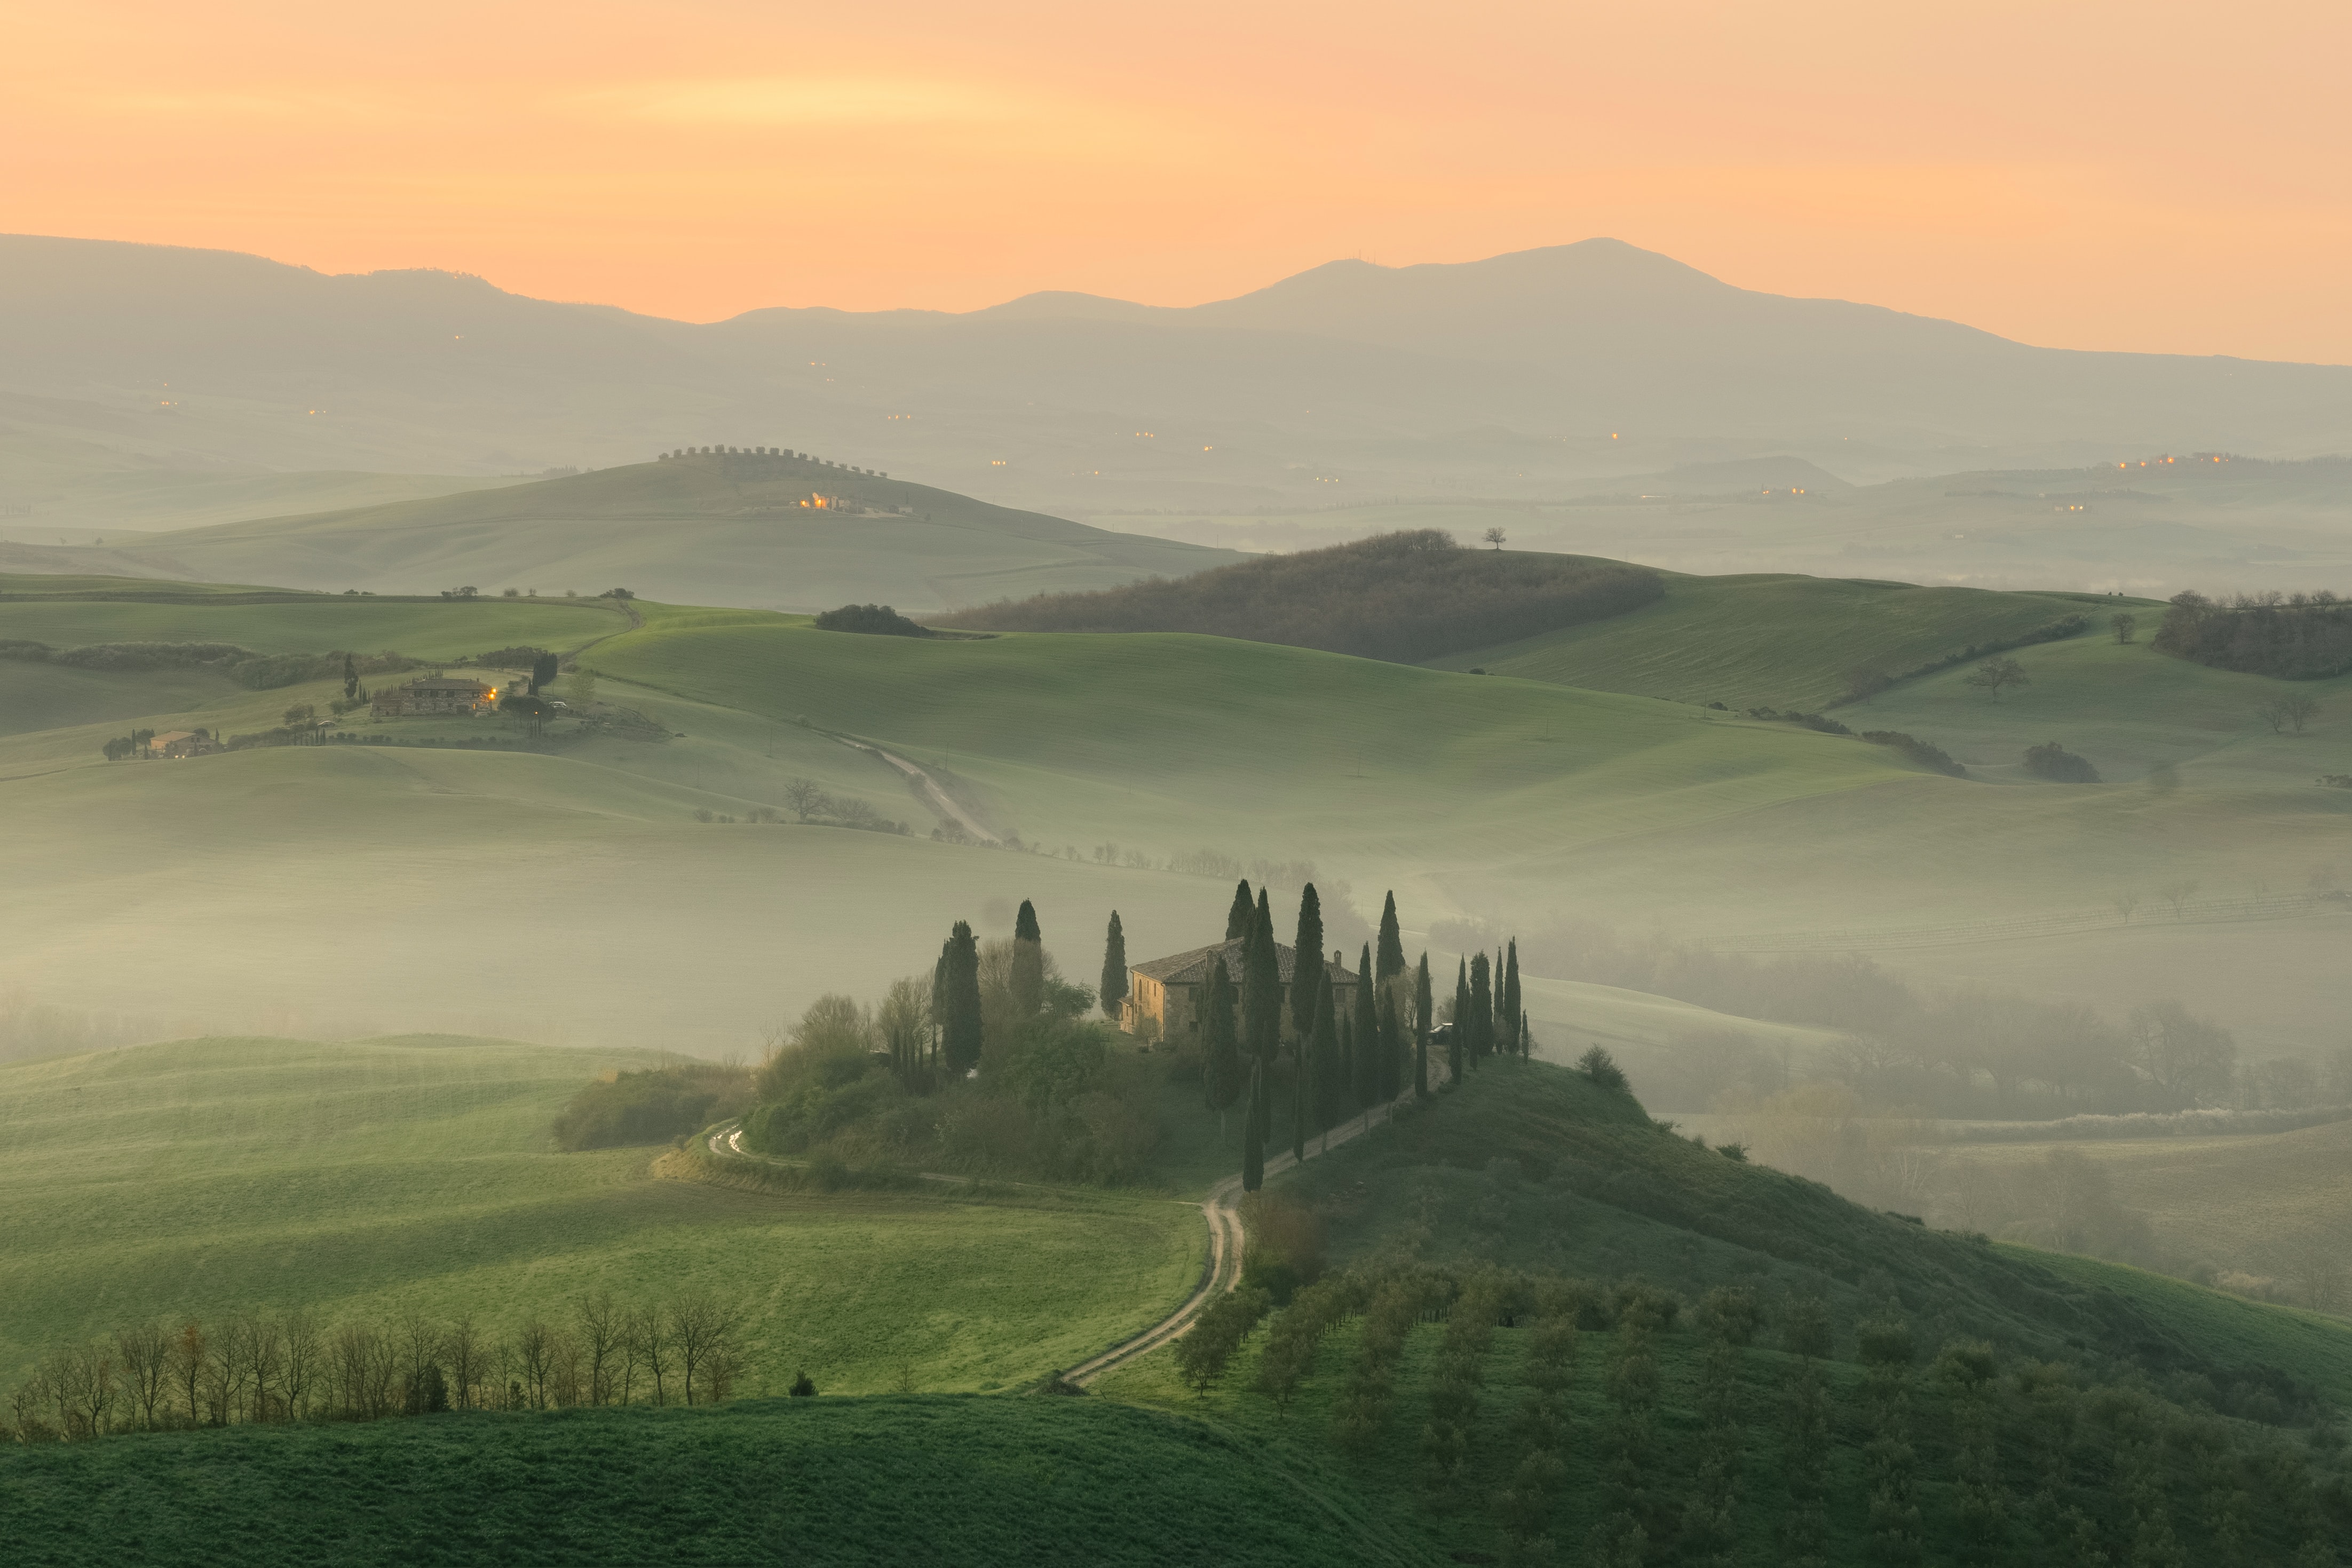 Tuscany, Italy (photo credit: Engjell Gjepali via unsplash)